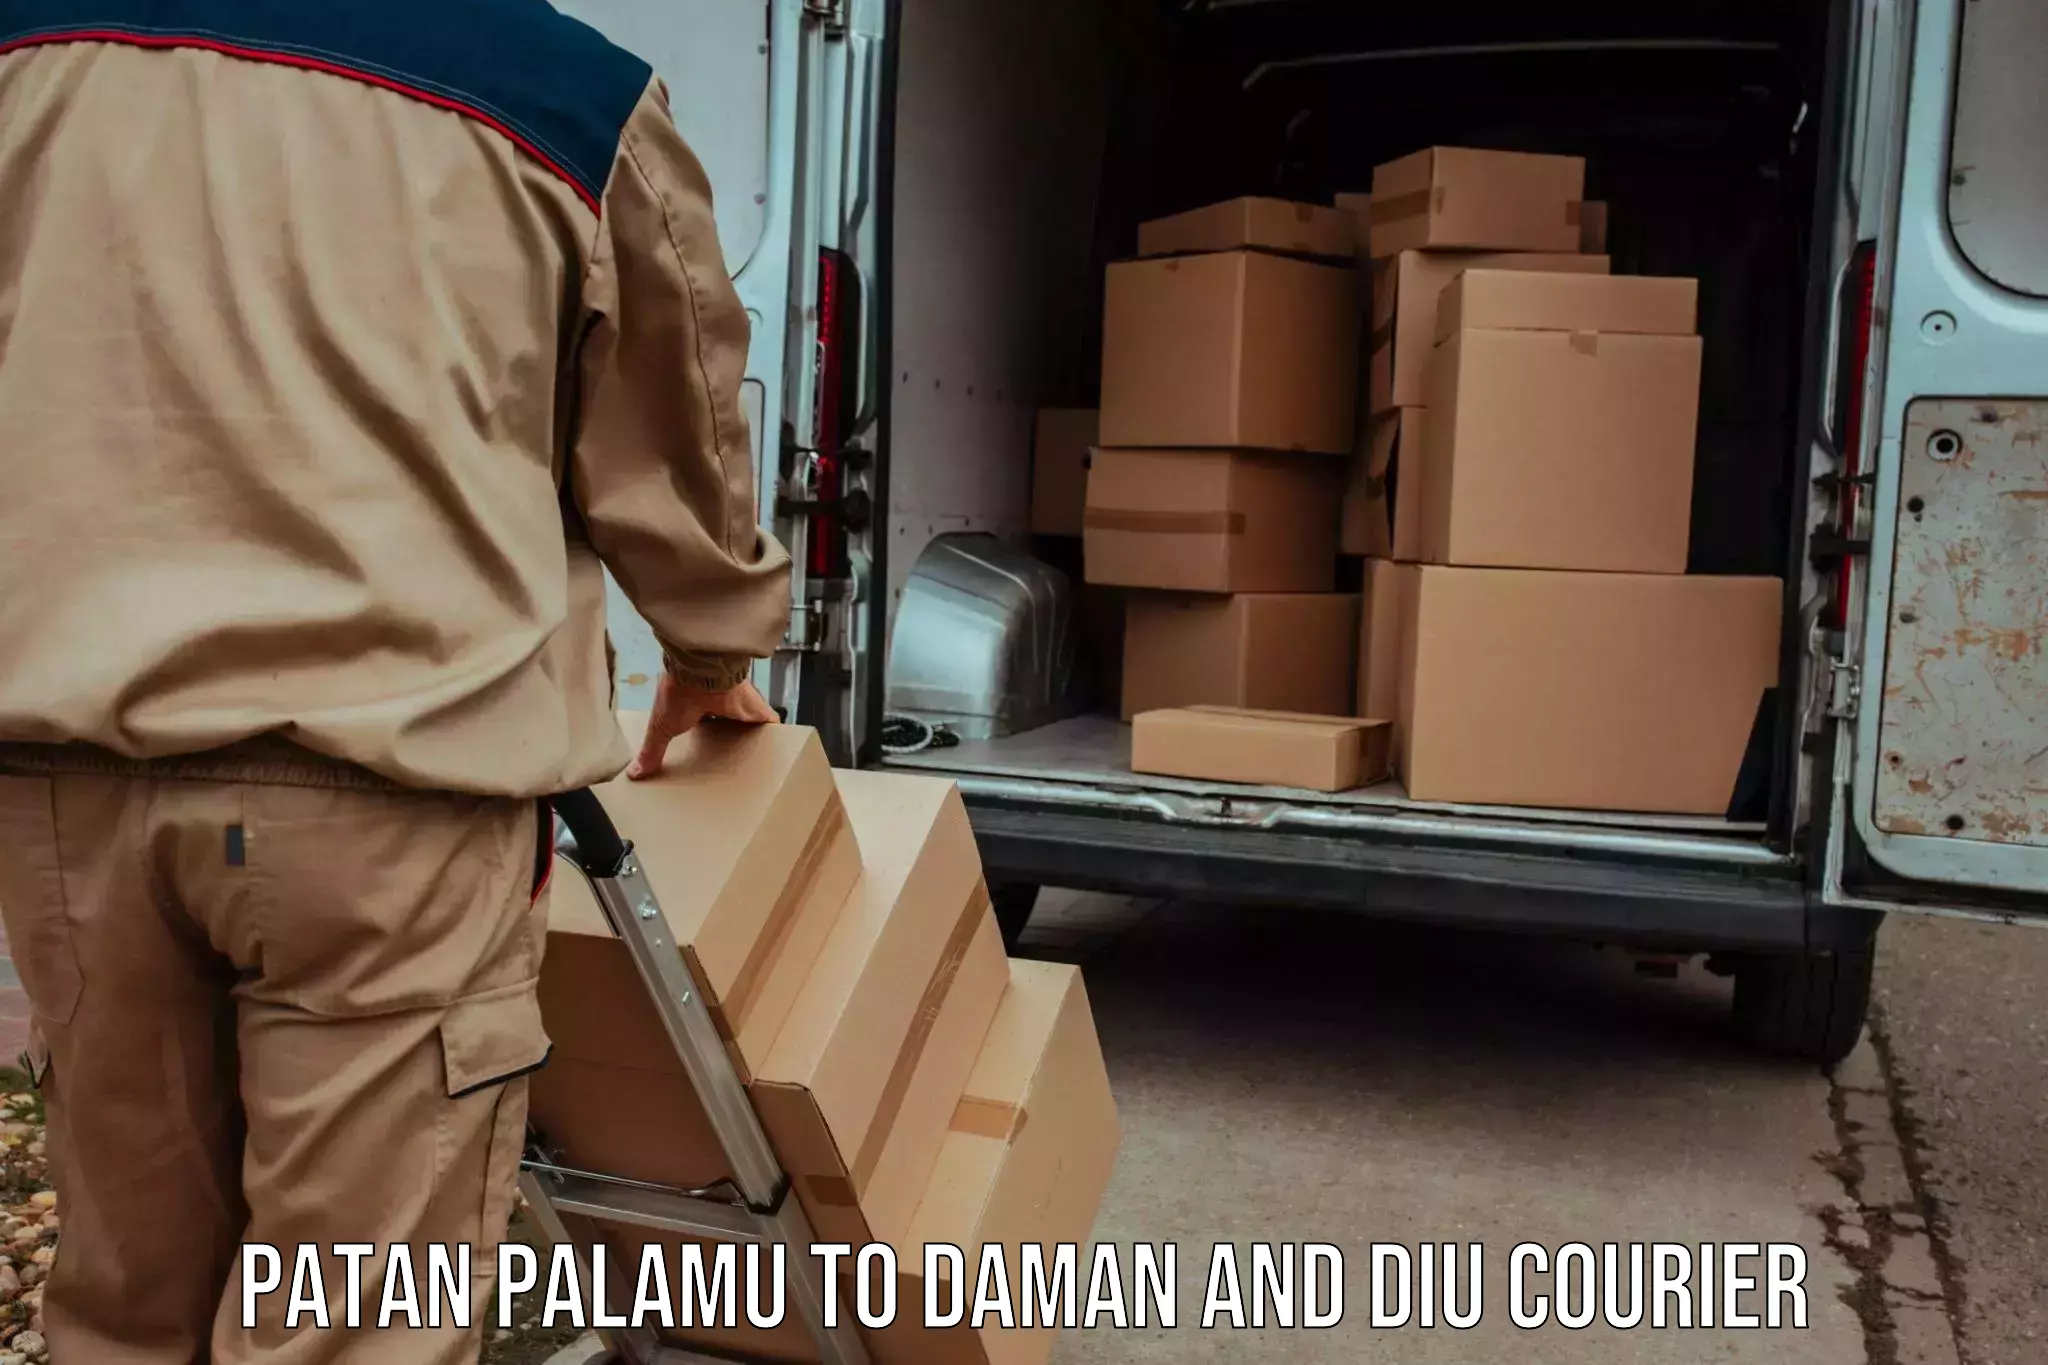 Courier service comparison Patan Palamu to Diu